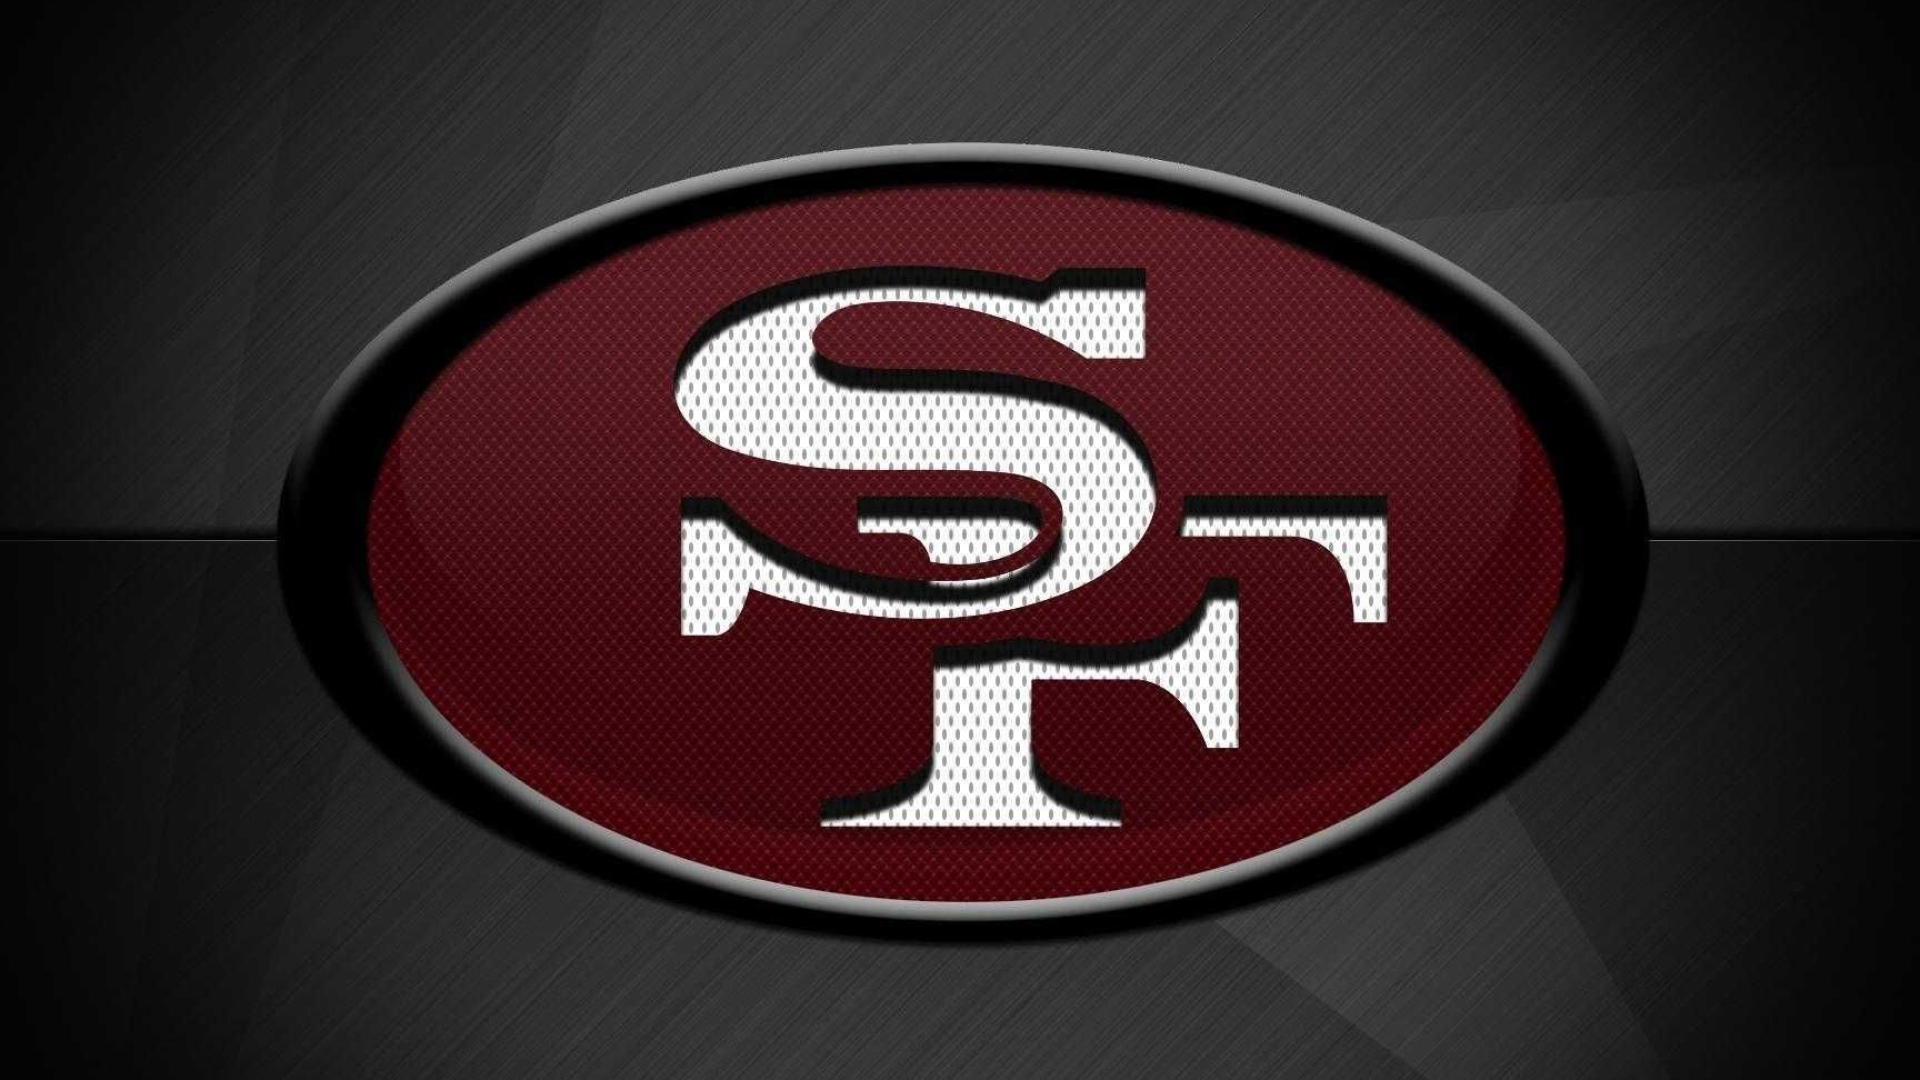 1920x1080 10 Best San Francisco 49Ers Wallpaper 2016 FULL HD 1080p For PC Background | San francisco 49ers logo, San francisco 49ers, 49ers